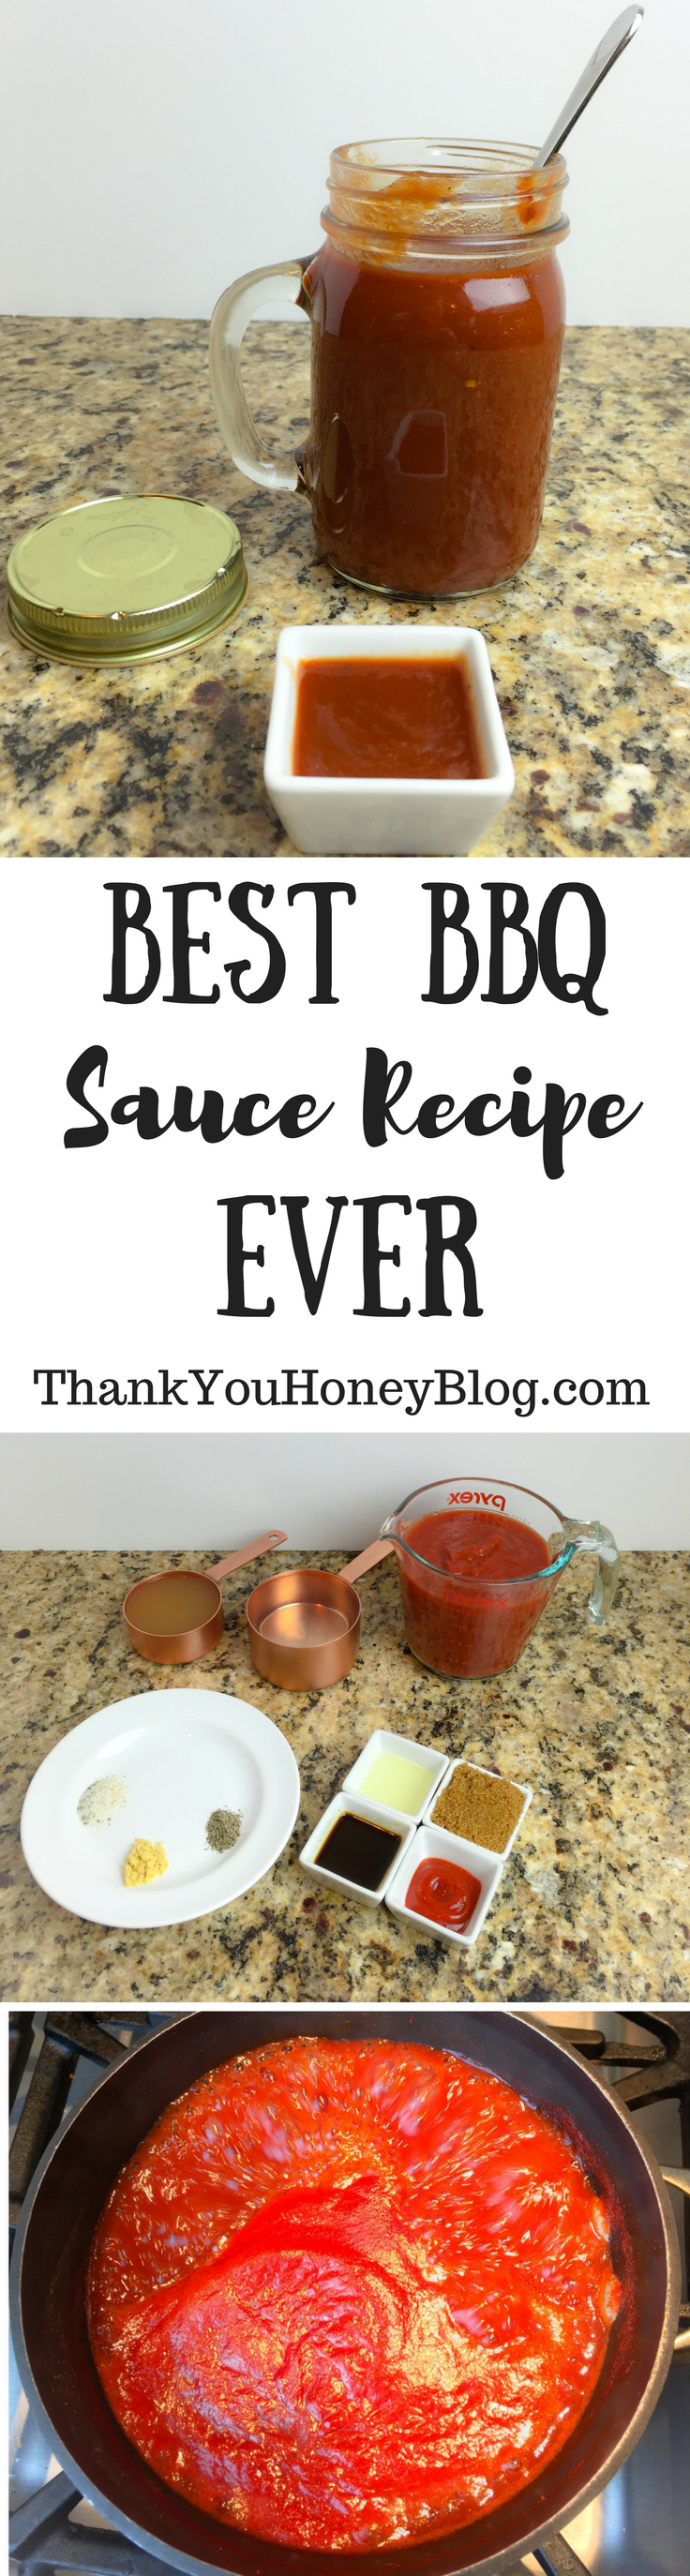 Best BBQ Sauce Recipe Ever